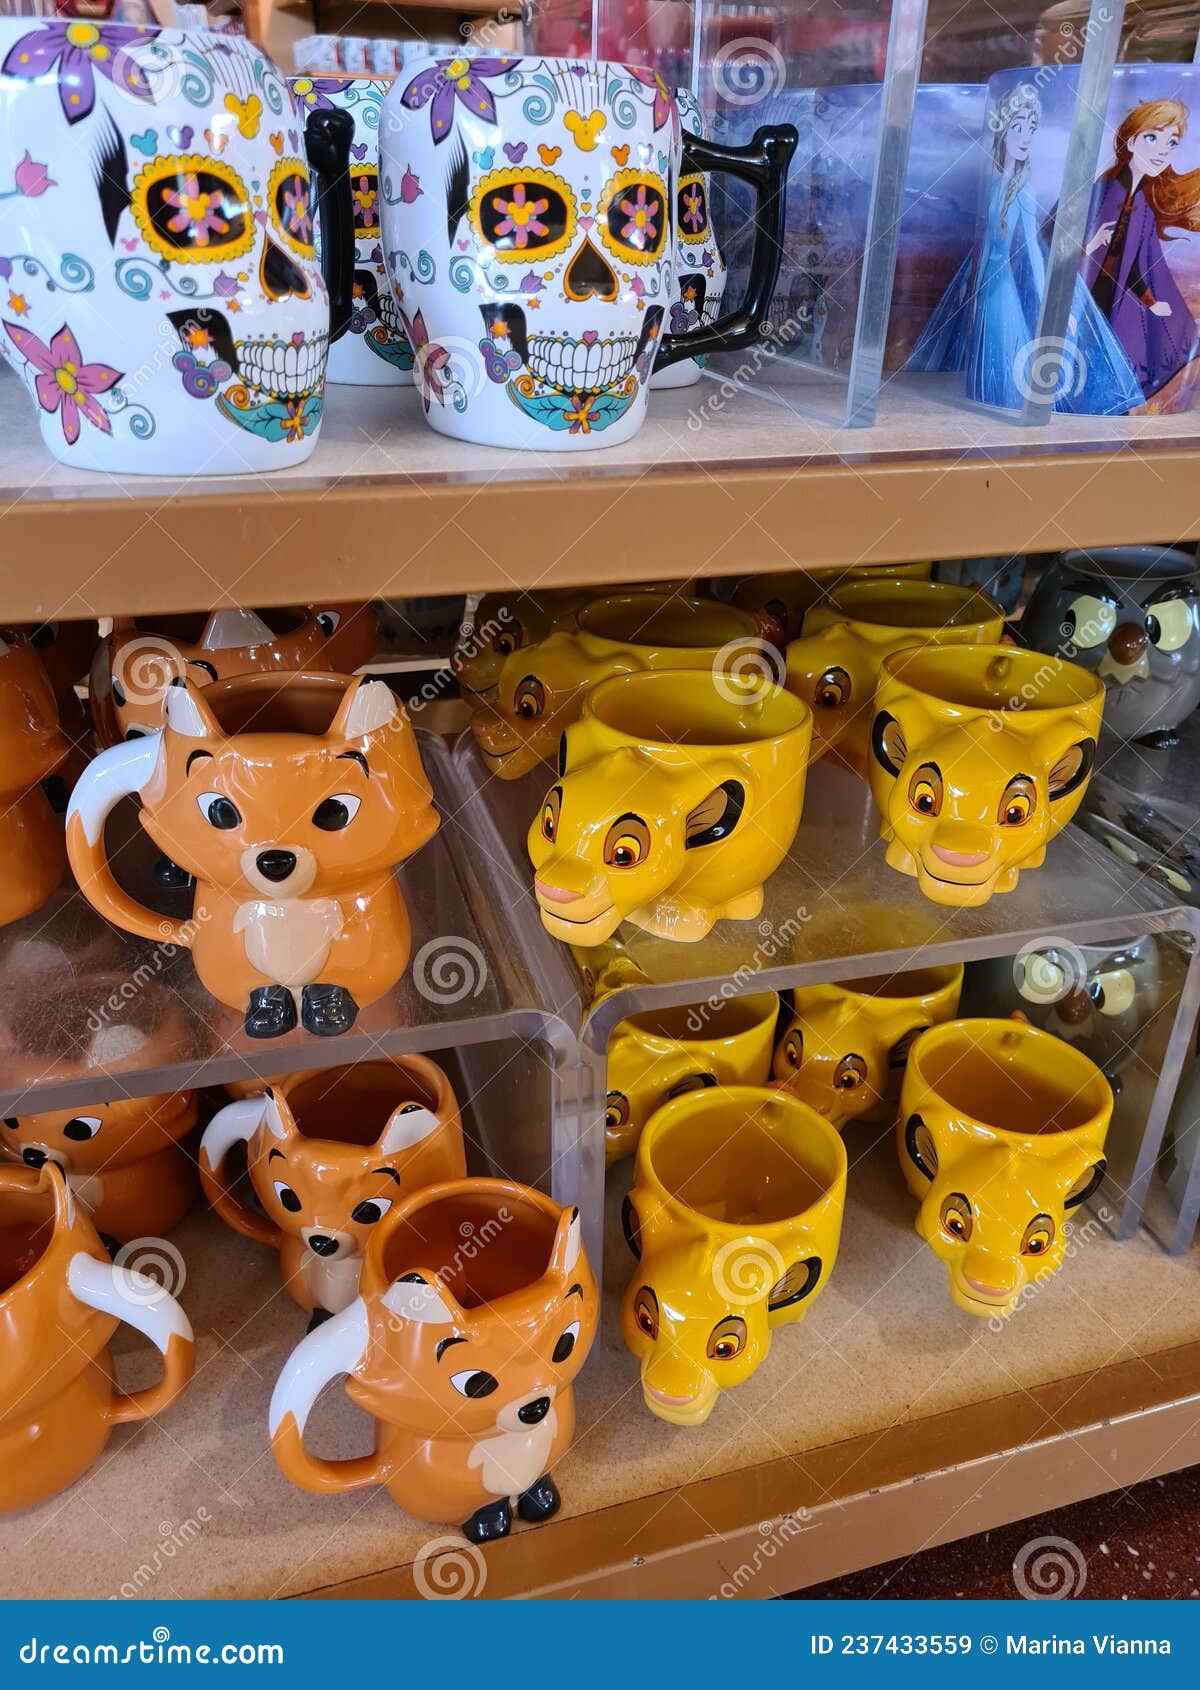 Mugs - World of Disney Store in DisneyLand Paris Editorial Stock Image -  Image of disney, mouse: 237433559